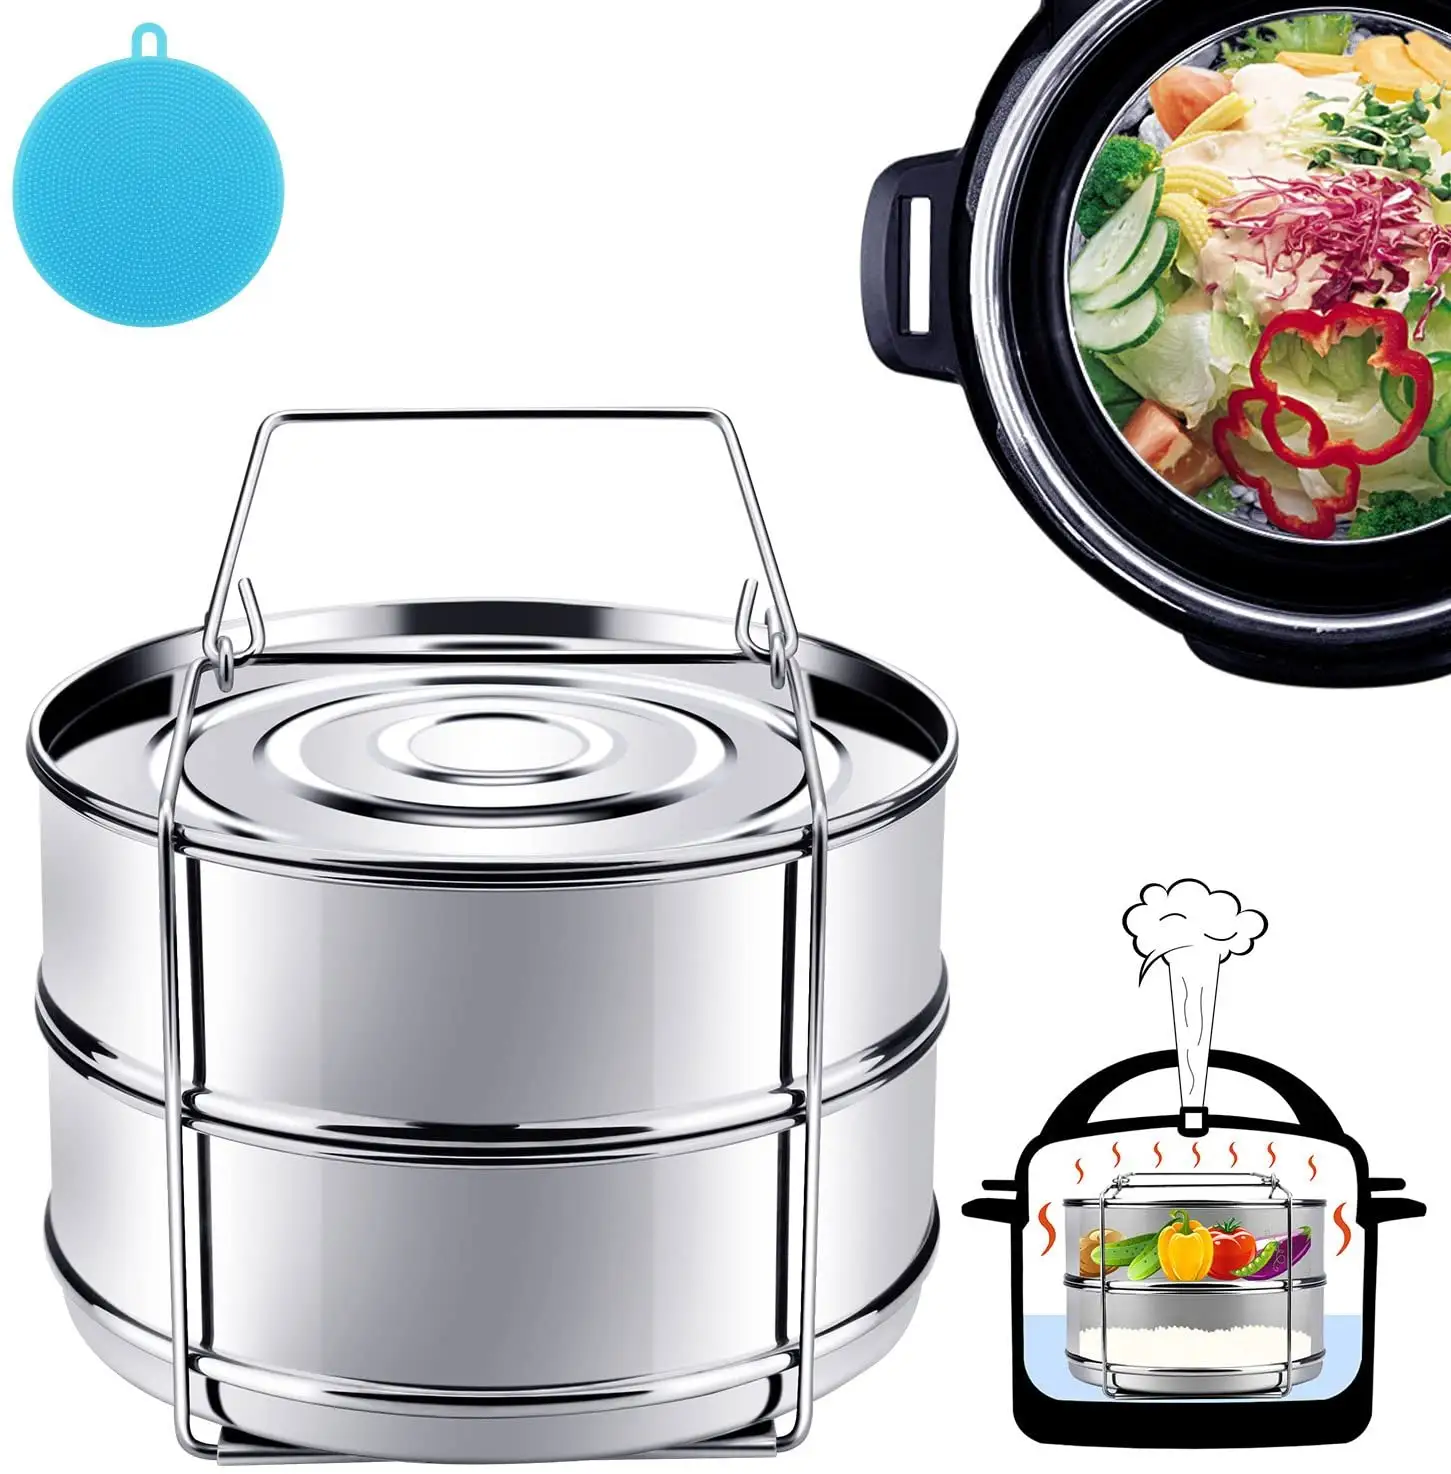 Stackable YIHENG Stainless Steel Food Steamer Insert Pans 6QT Pressure Cooker Insert Pot